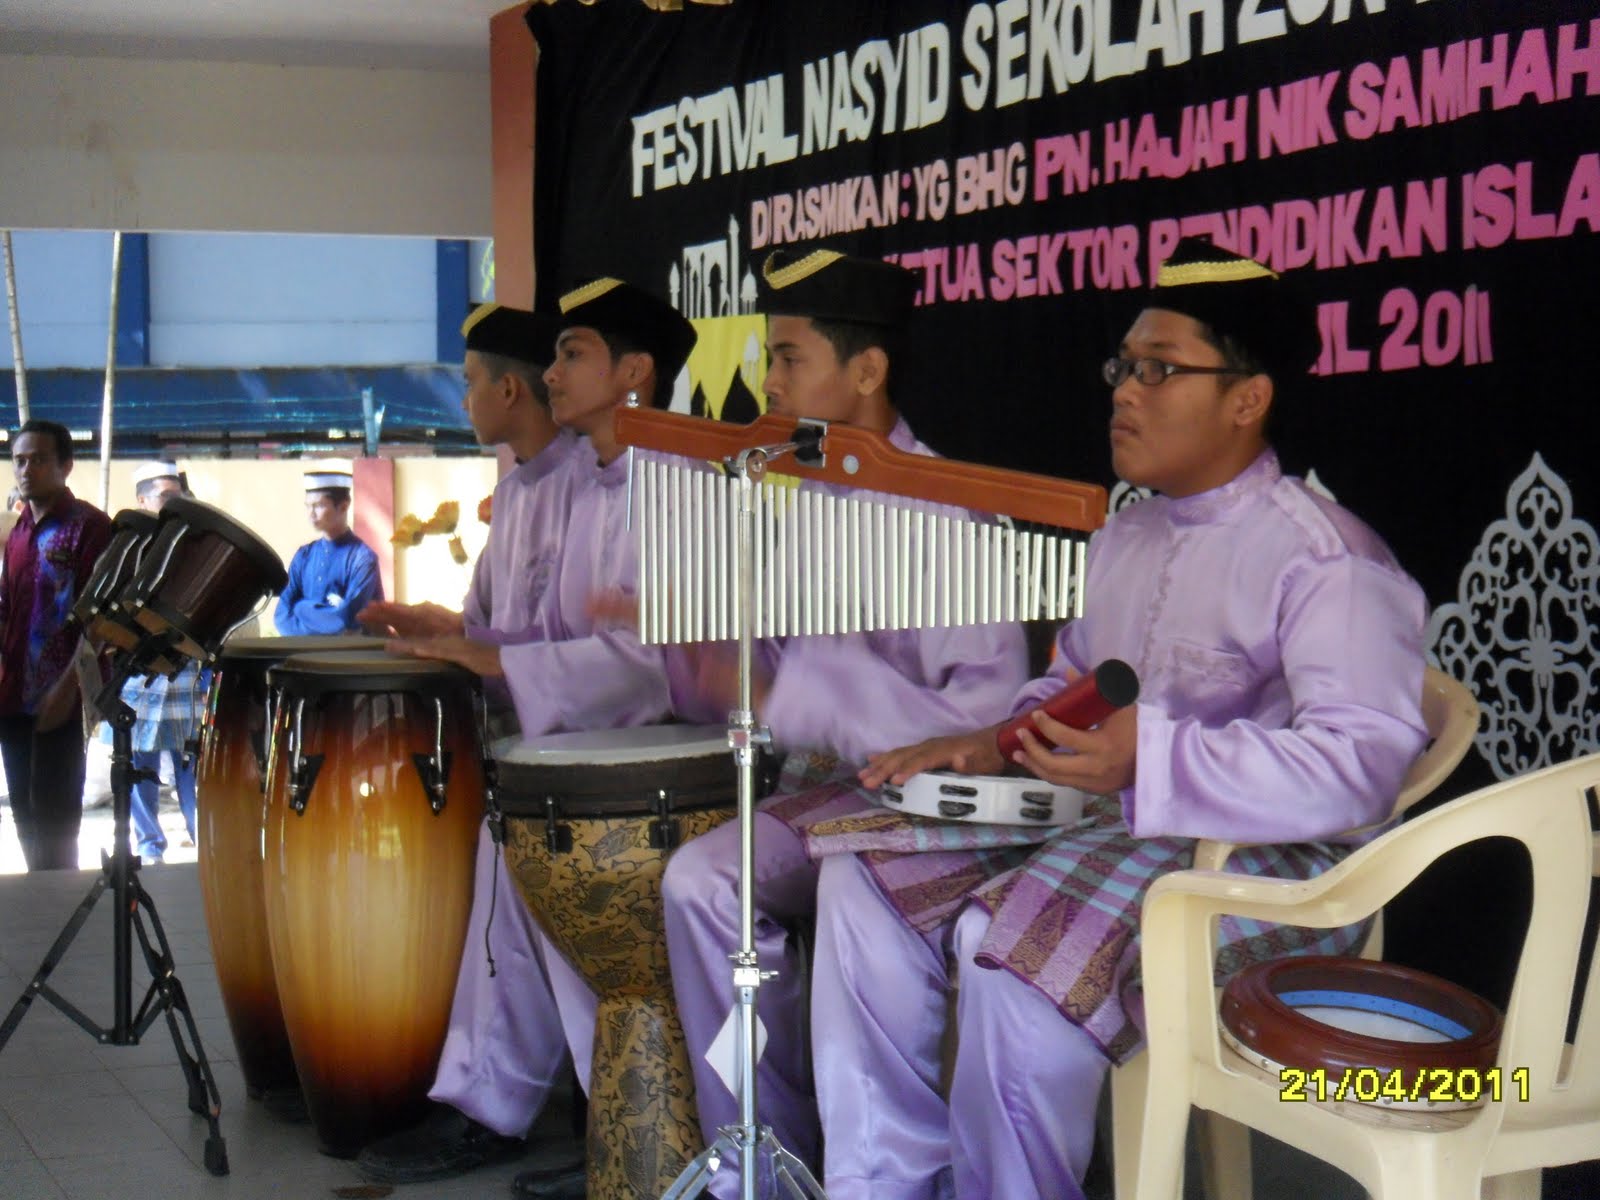 Festival Nasyid Zon Pudu Wilayah Persekutuan Kuala Lumpur 